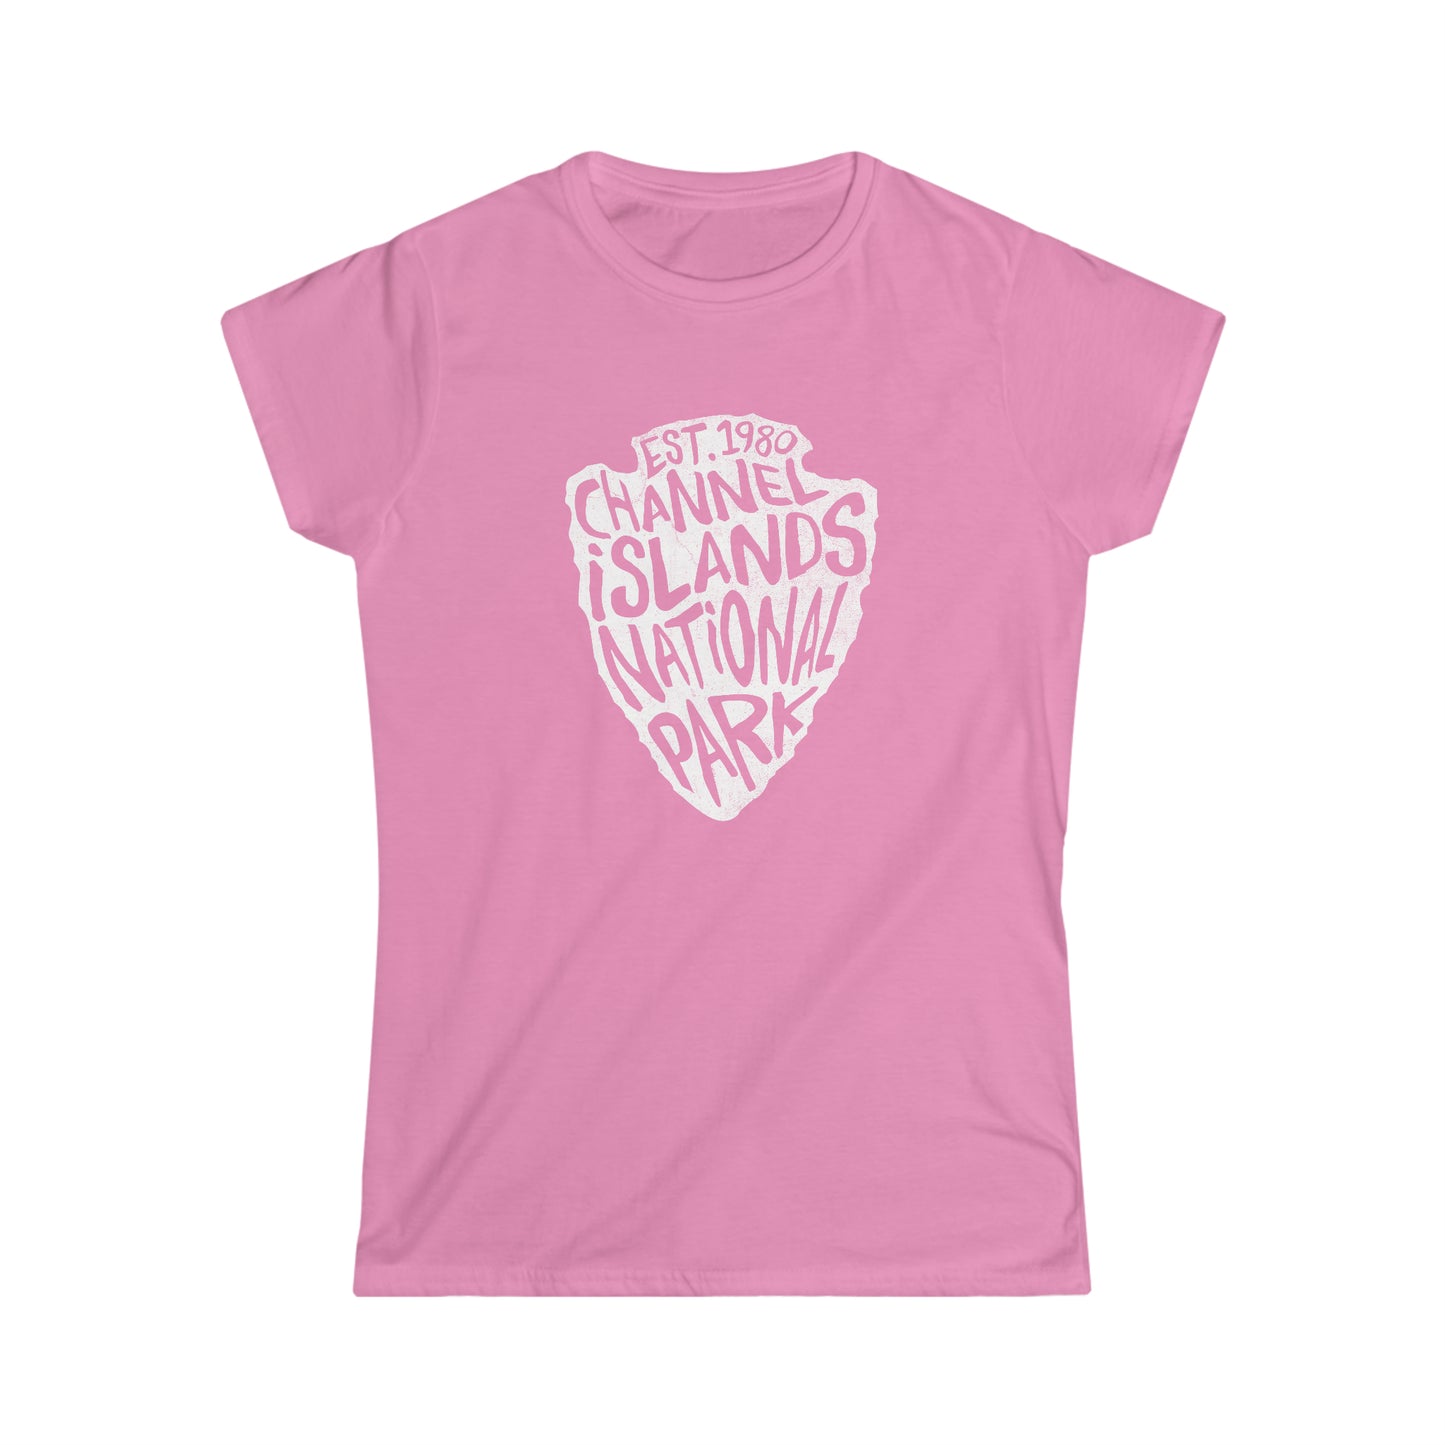 Channel Islands National Park Women's T-Shirt - Arrowhead Design